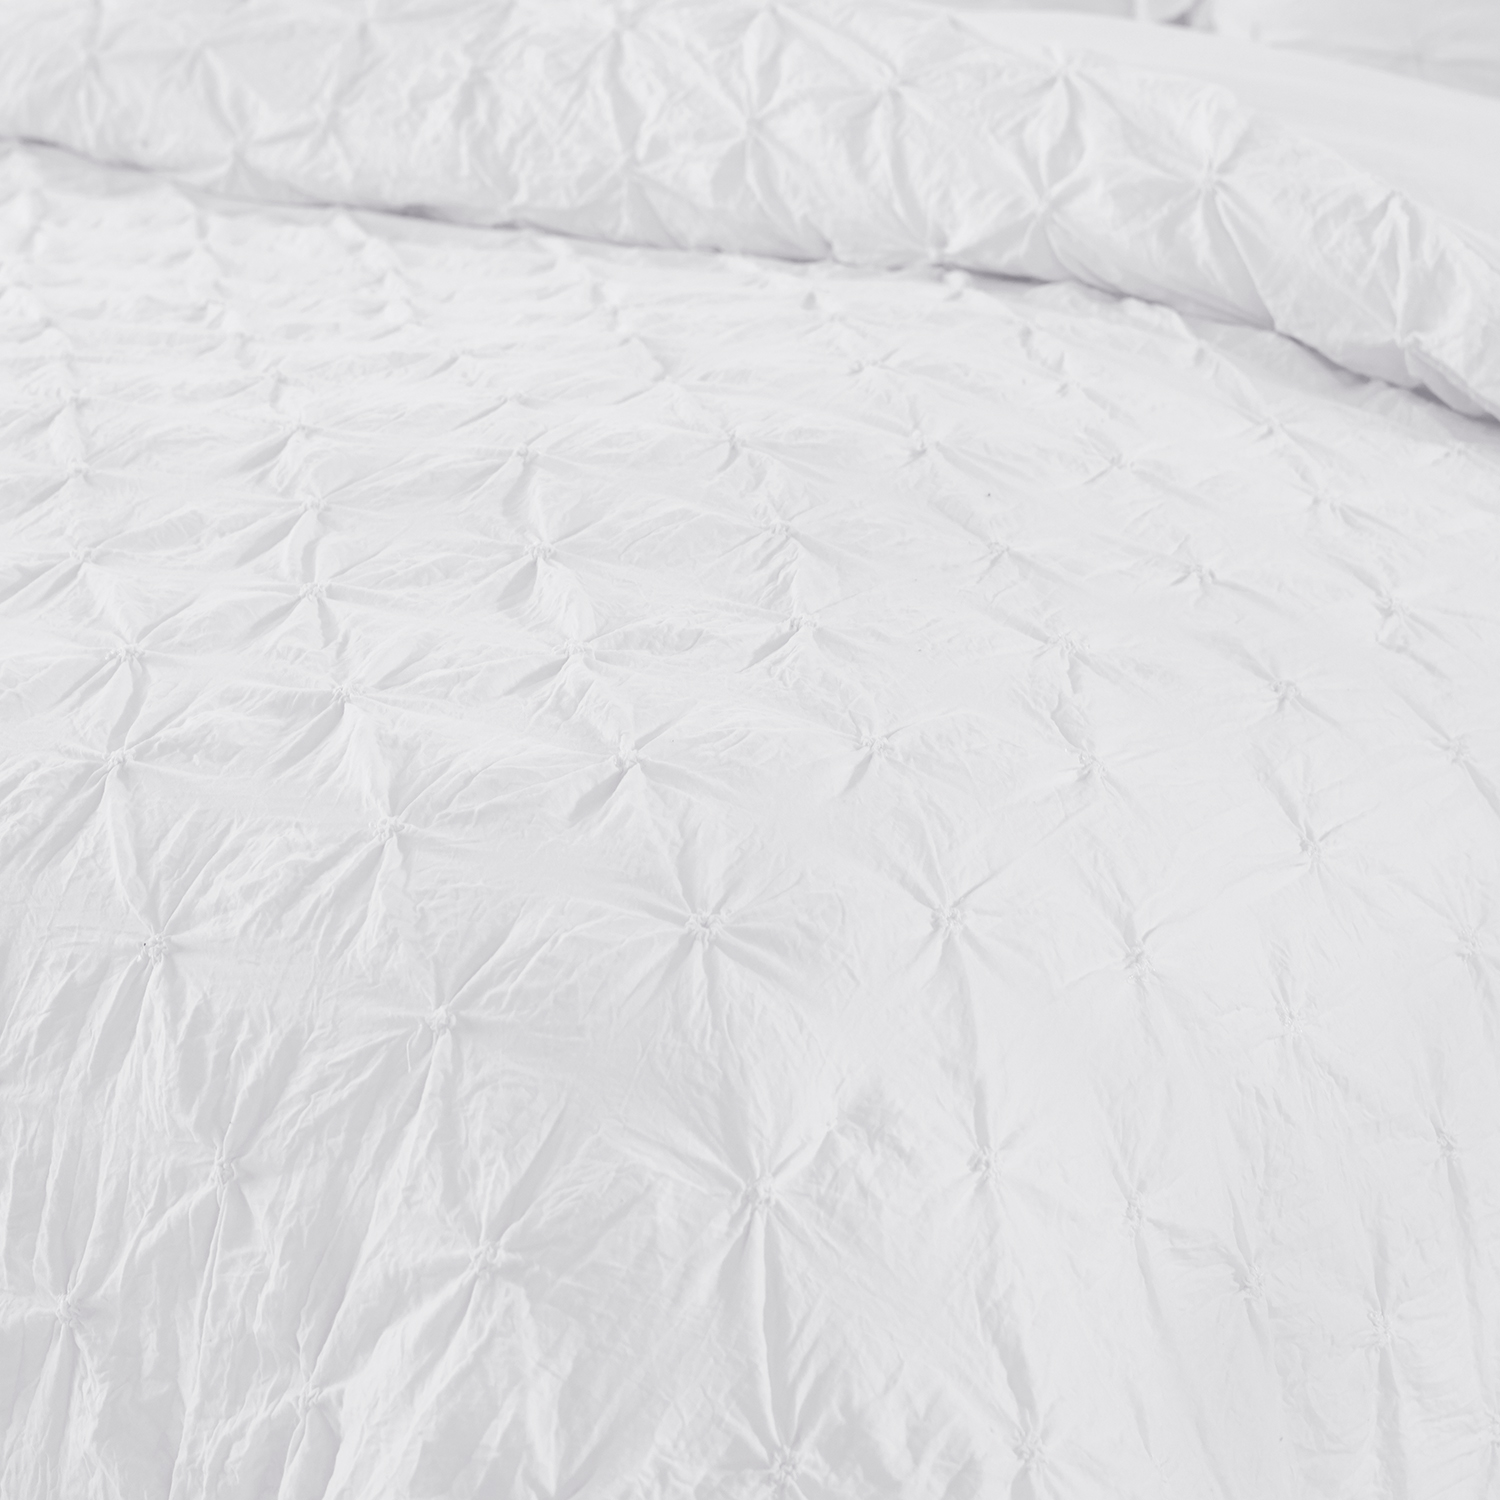 HIG 3 Piece Comforter Set White Lace Ruffled Pleat Design